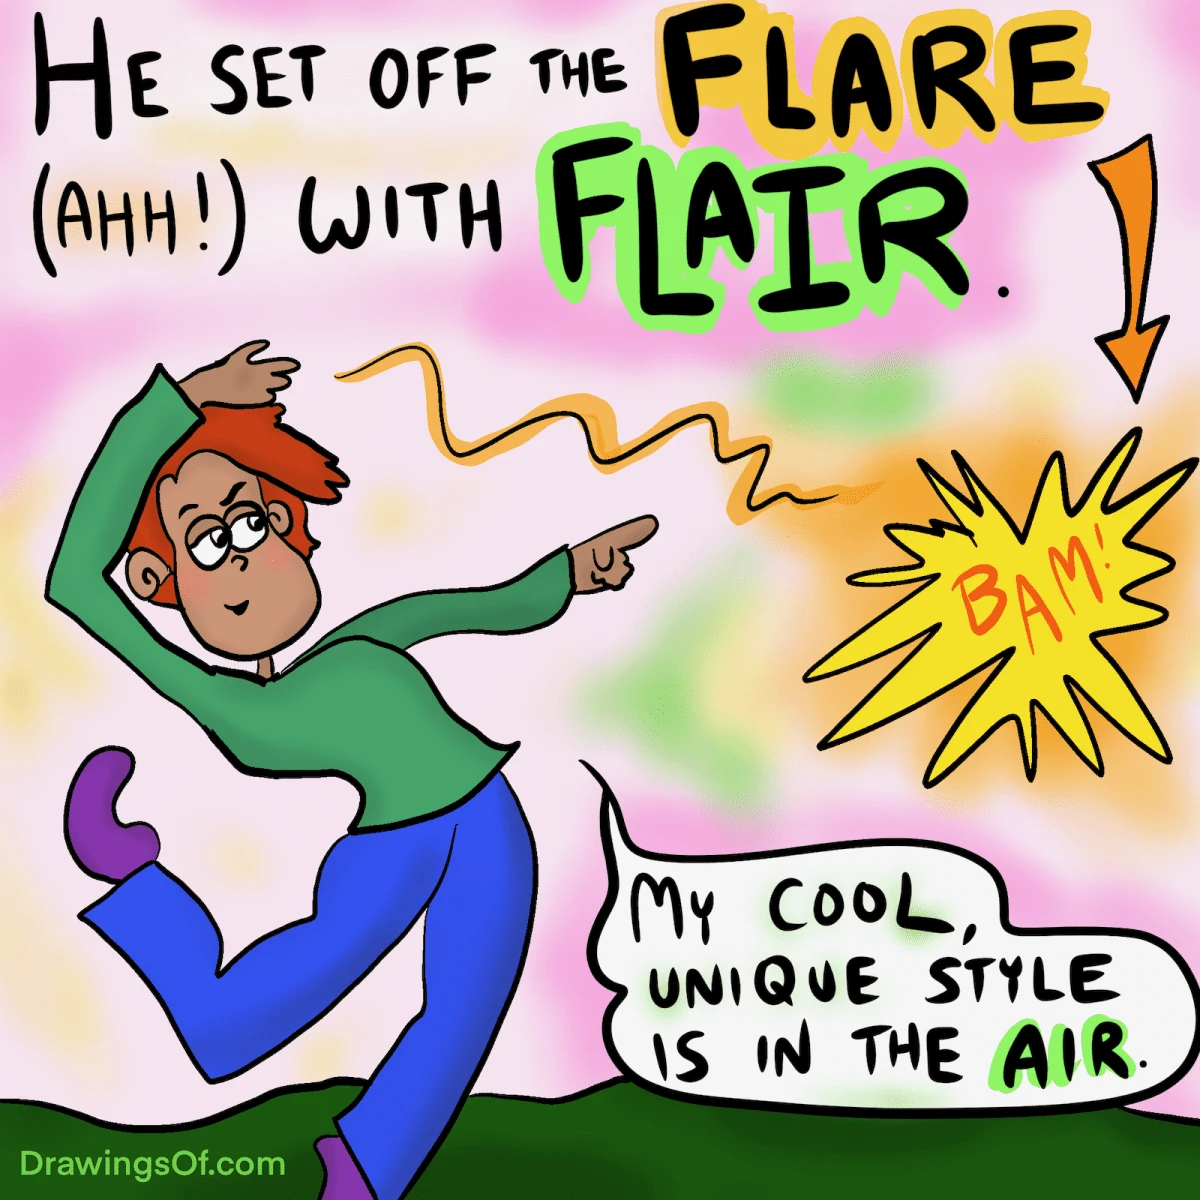 Flare vs Flair